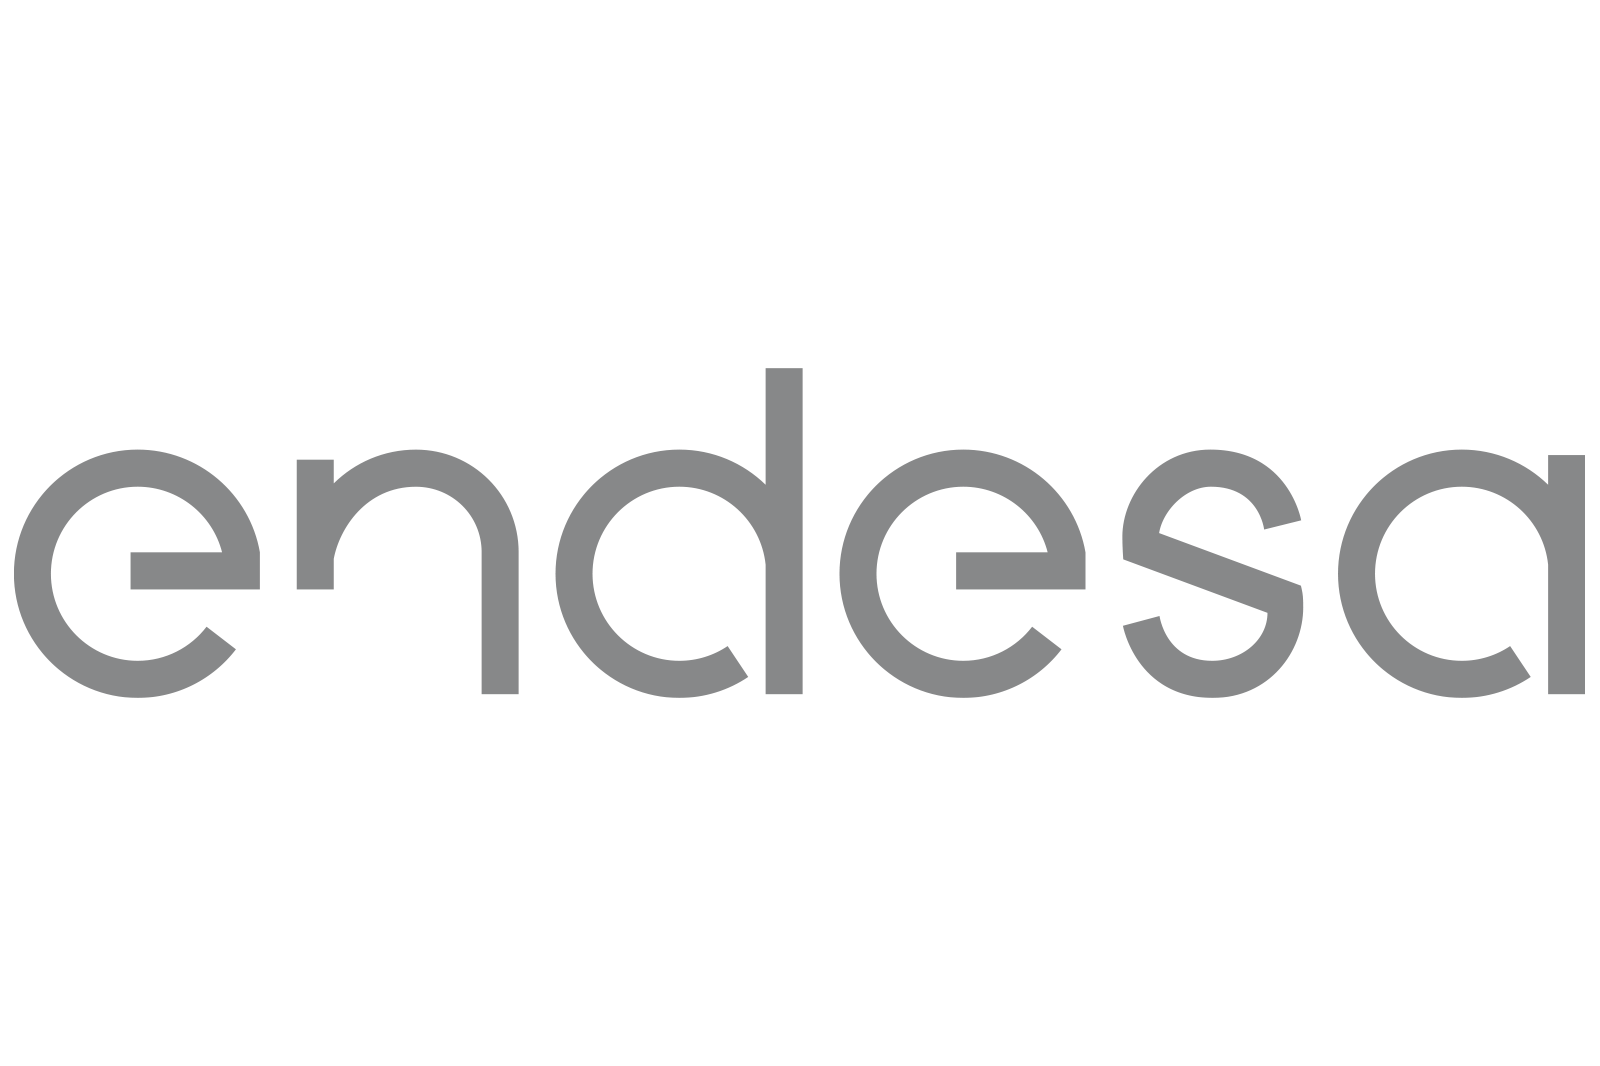 melonkicks-clients-logos-endesa.png